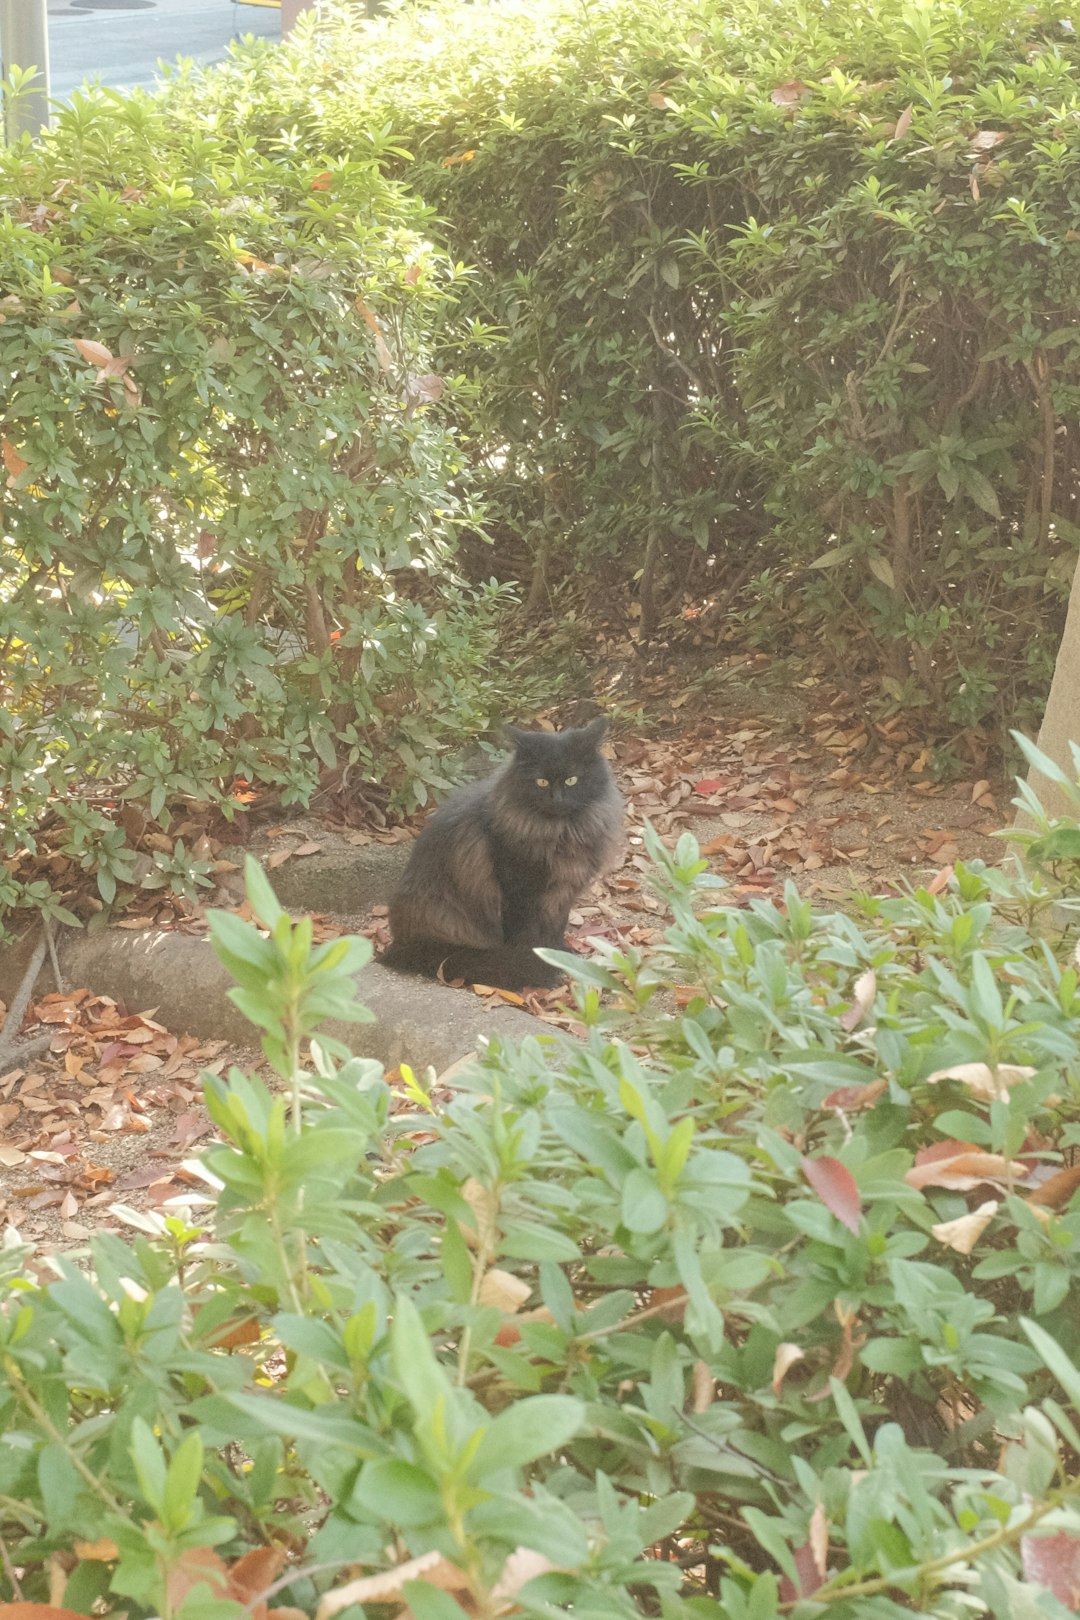 black cat on green grass